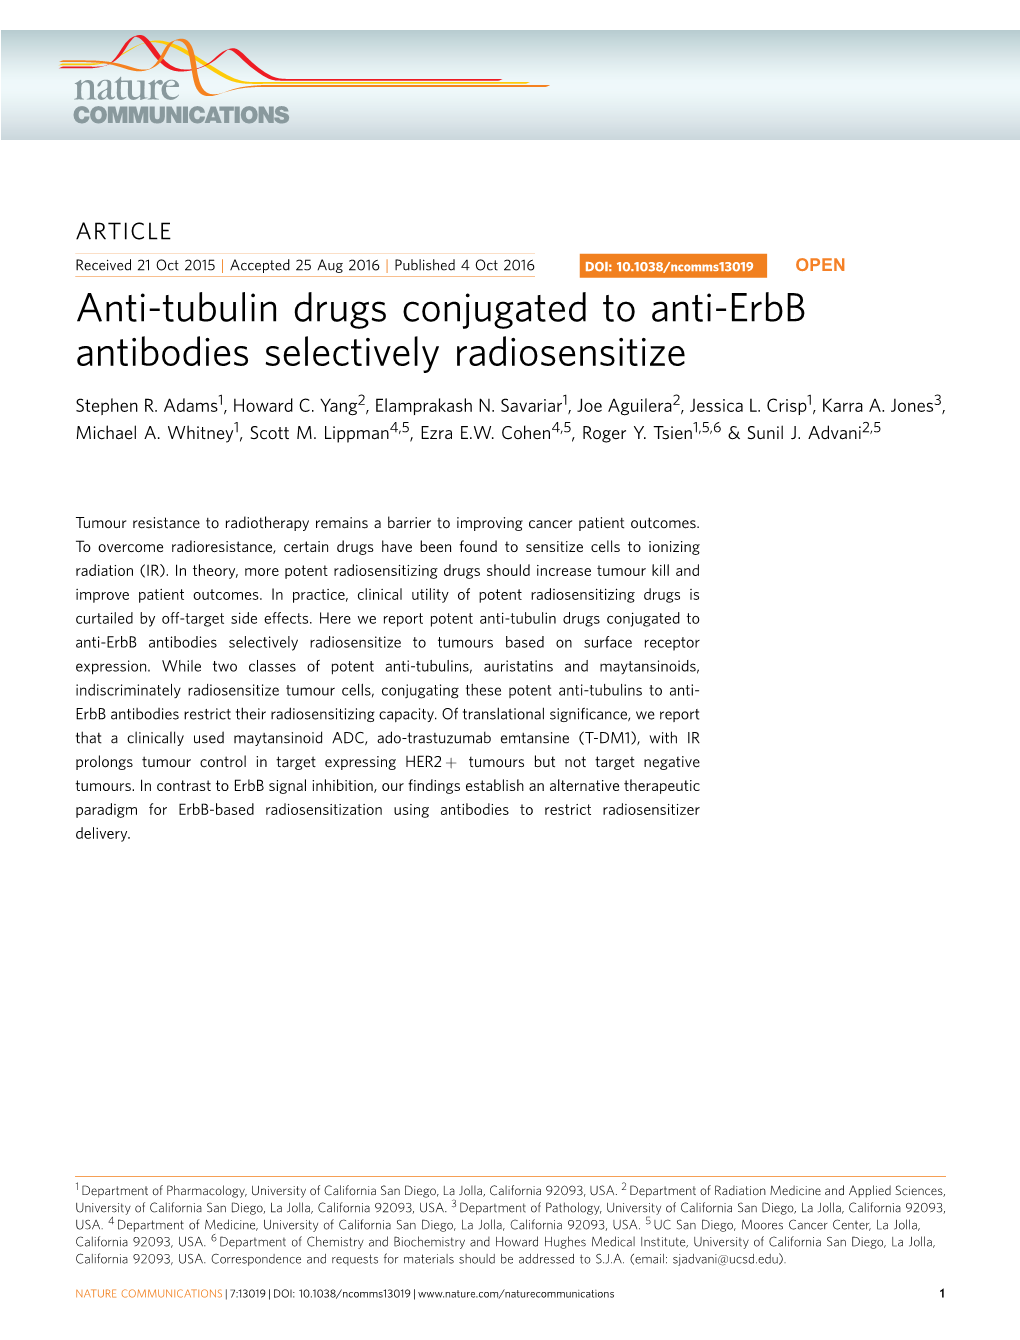 Anti-Tubulin Drugs Conjugated to Anti-Erbb Antibodies Selectively Radiosensitize